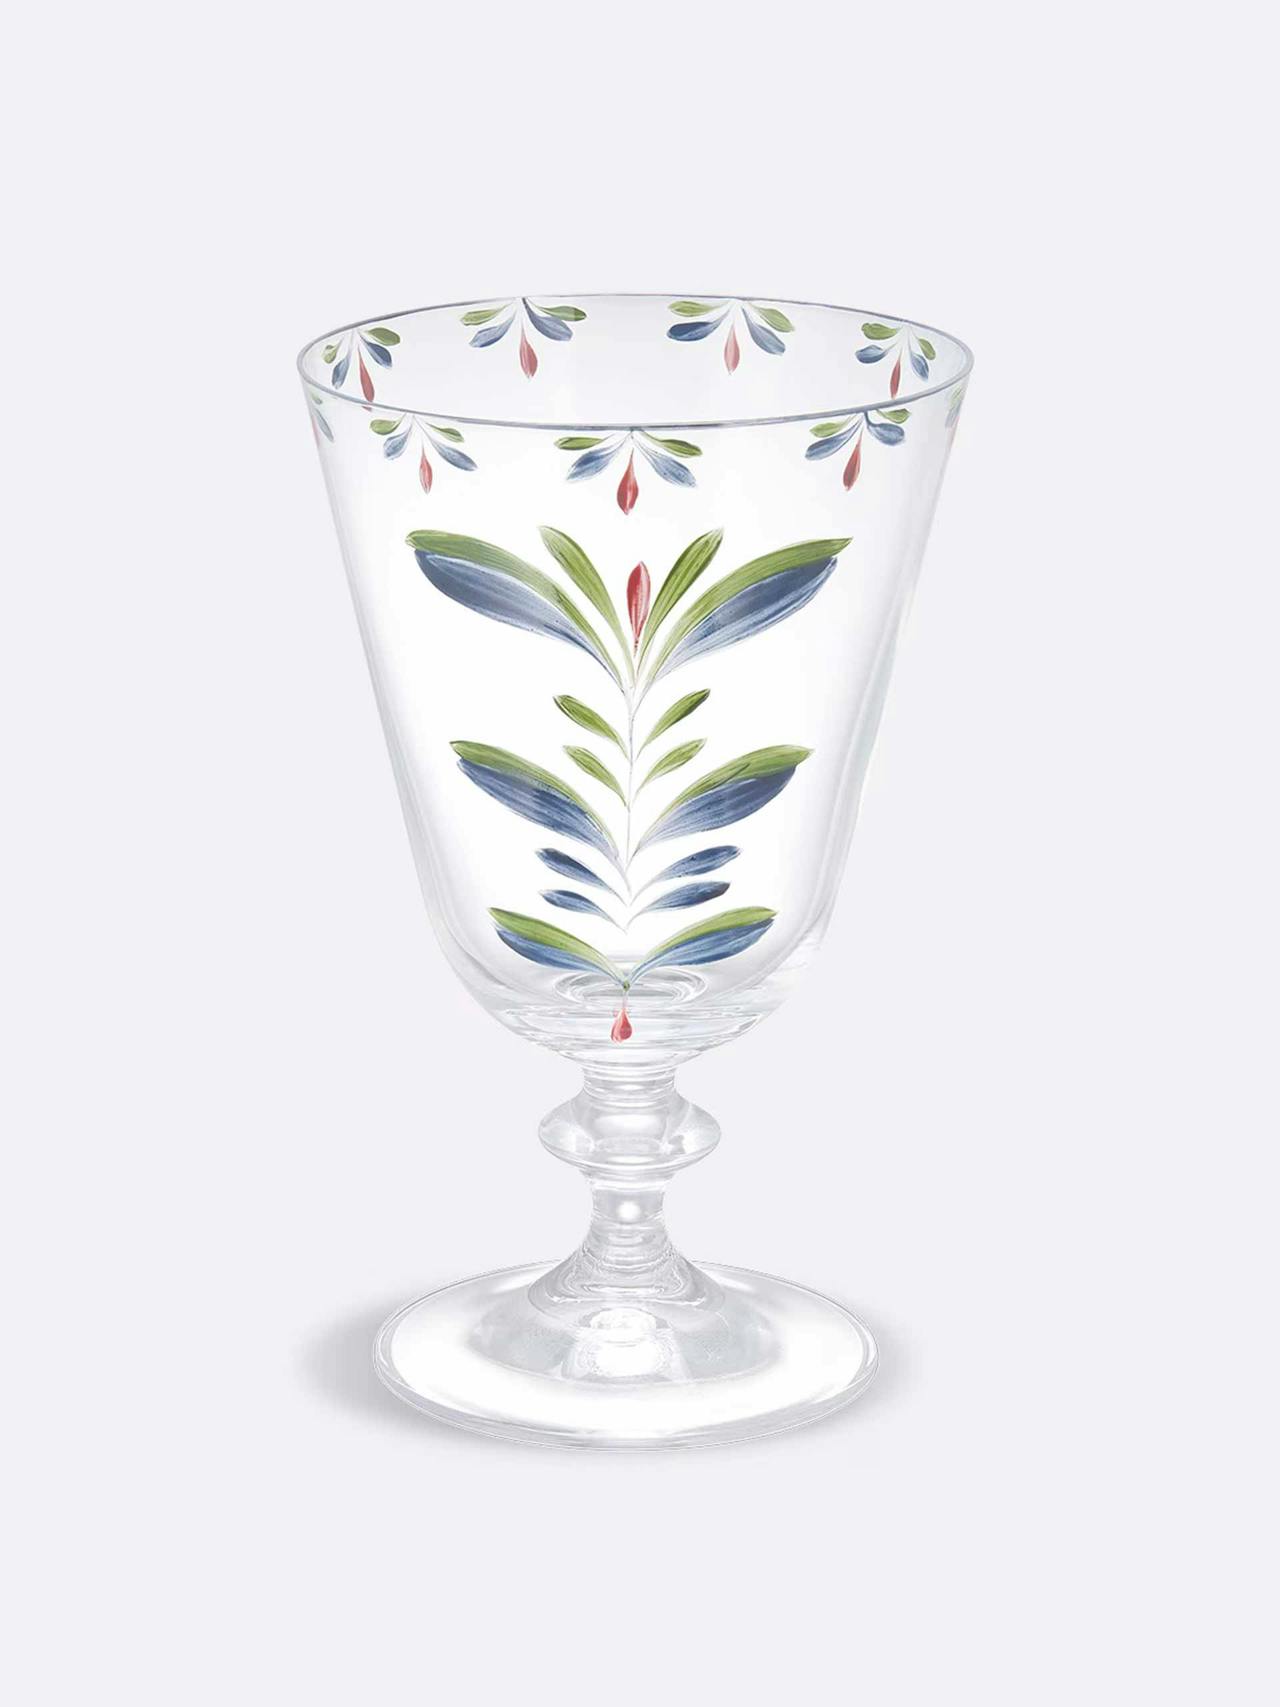 Hand-painted wine glass